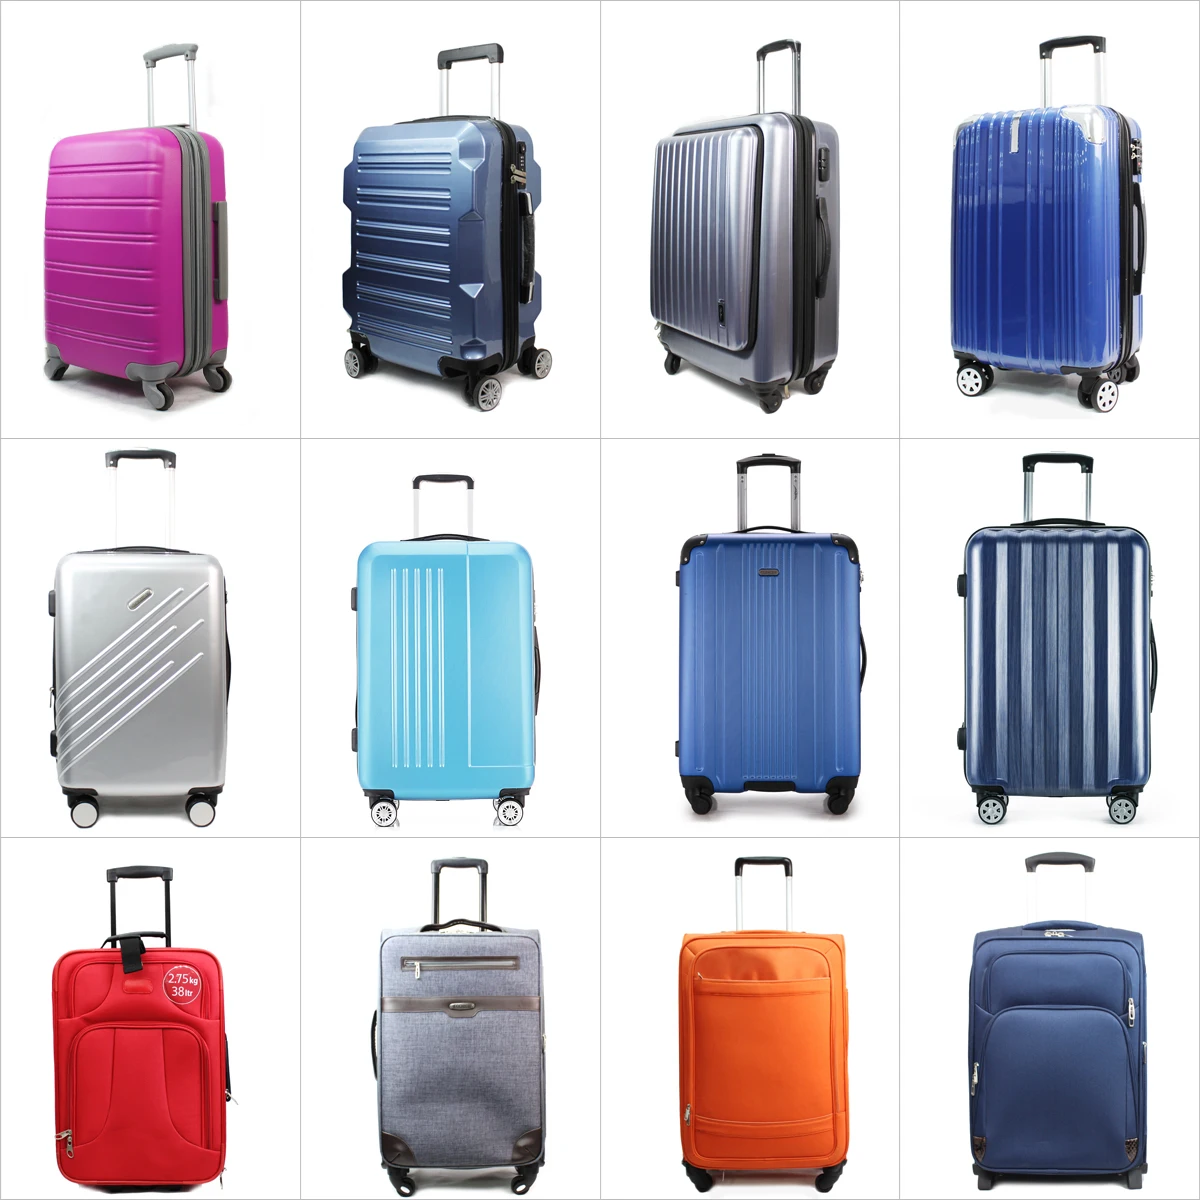 more luggage design.jpg